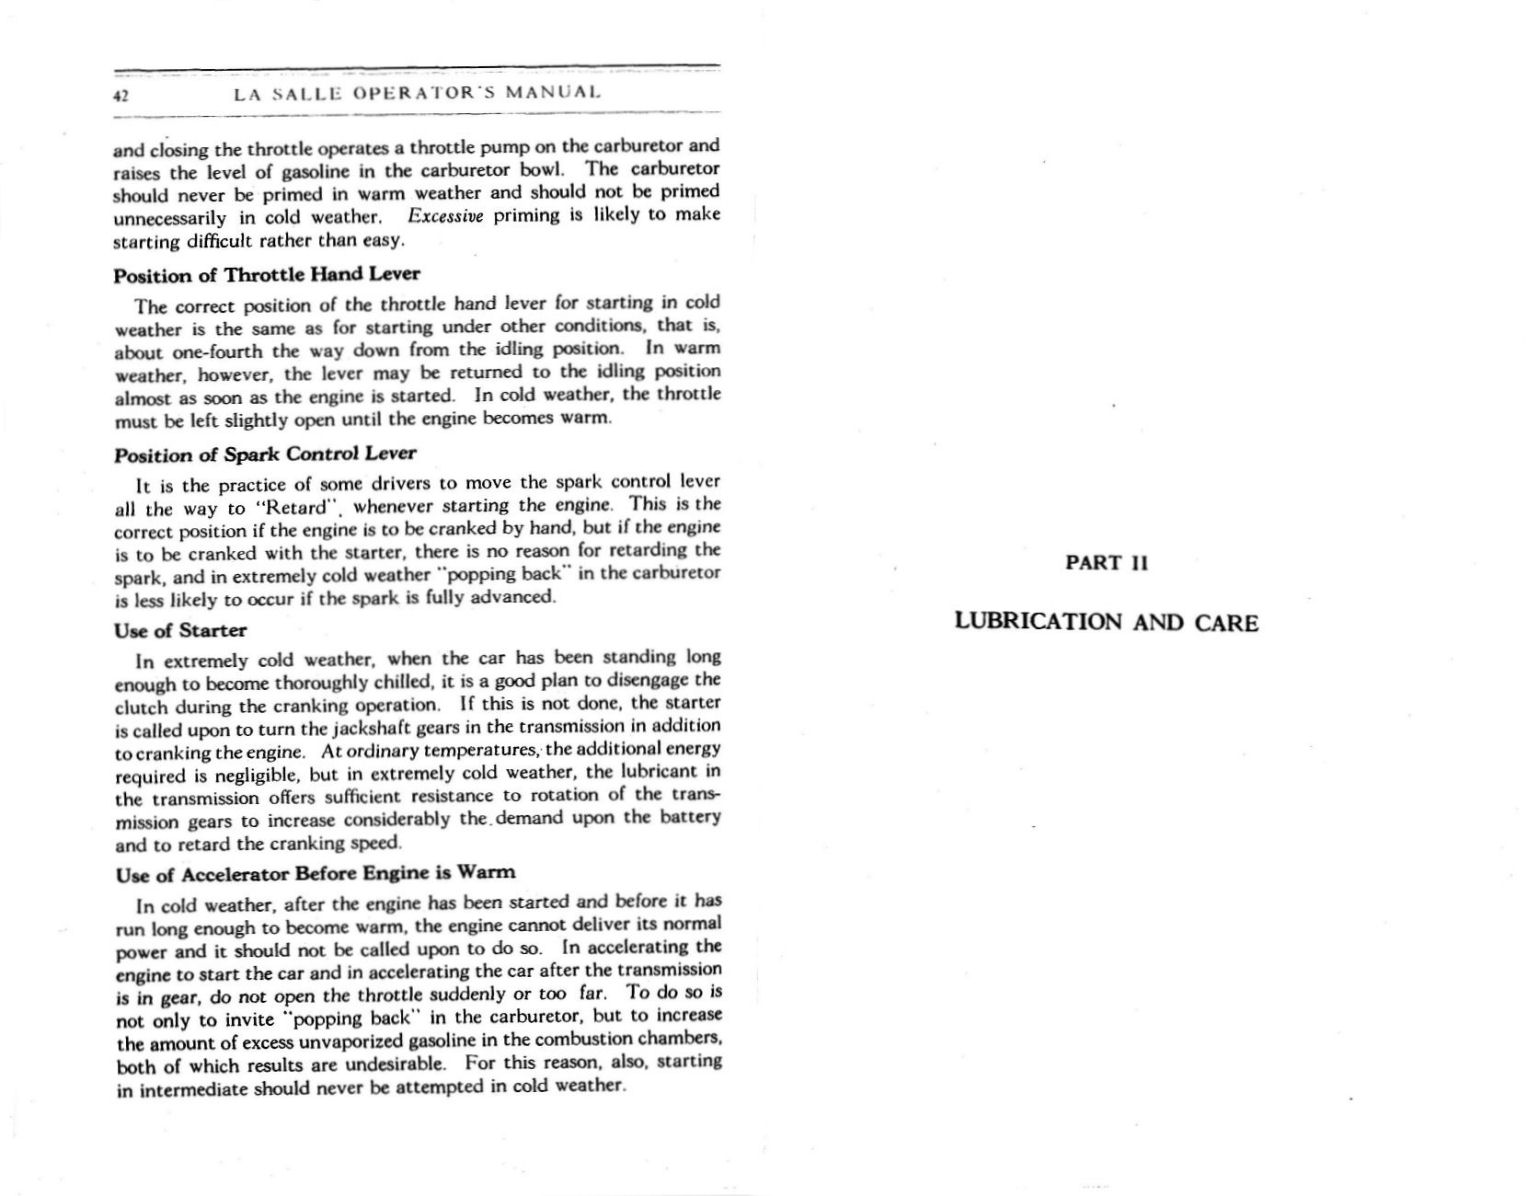 1927_LaSalle_Manual-042-043